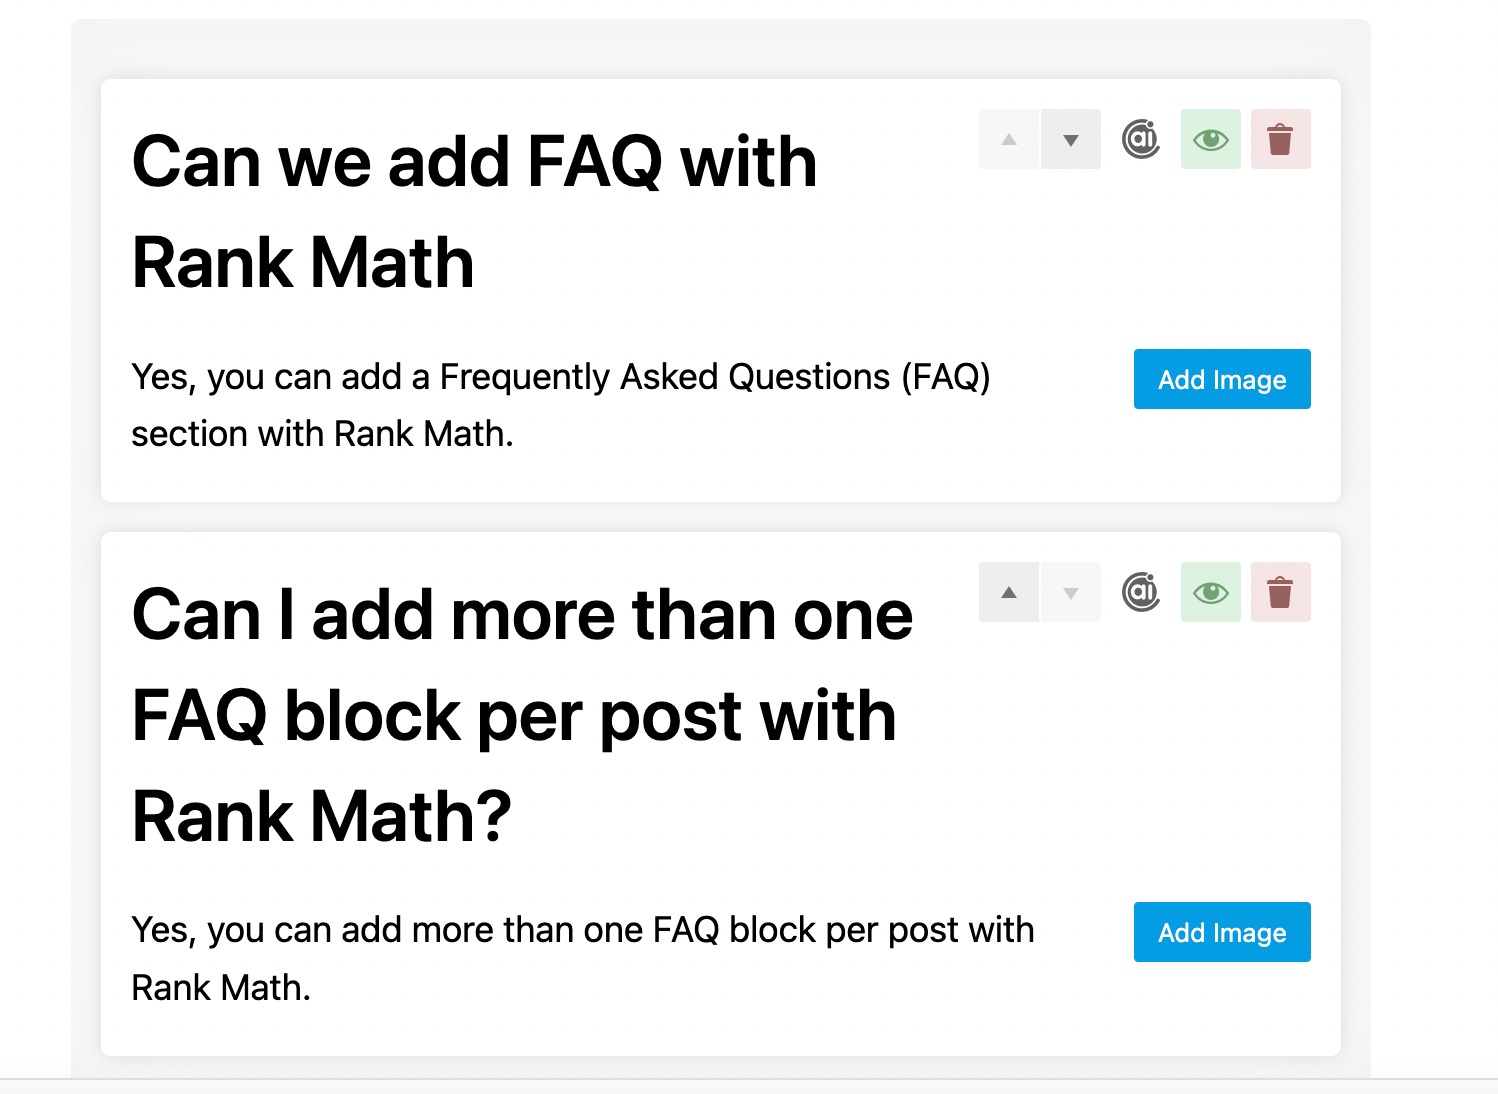 Rank Math FAQ block example